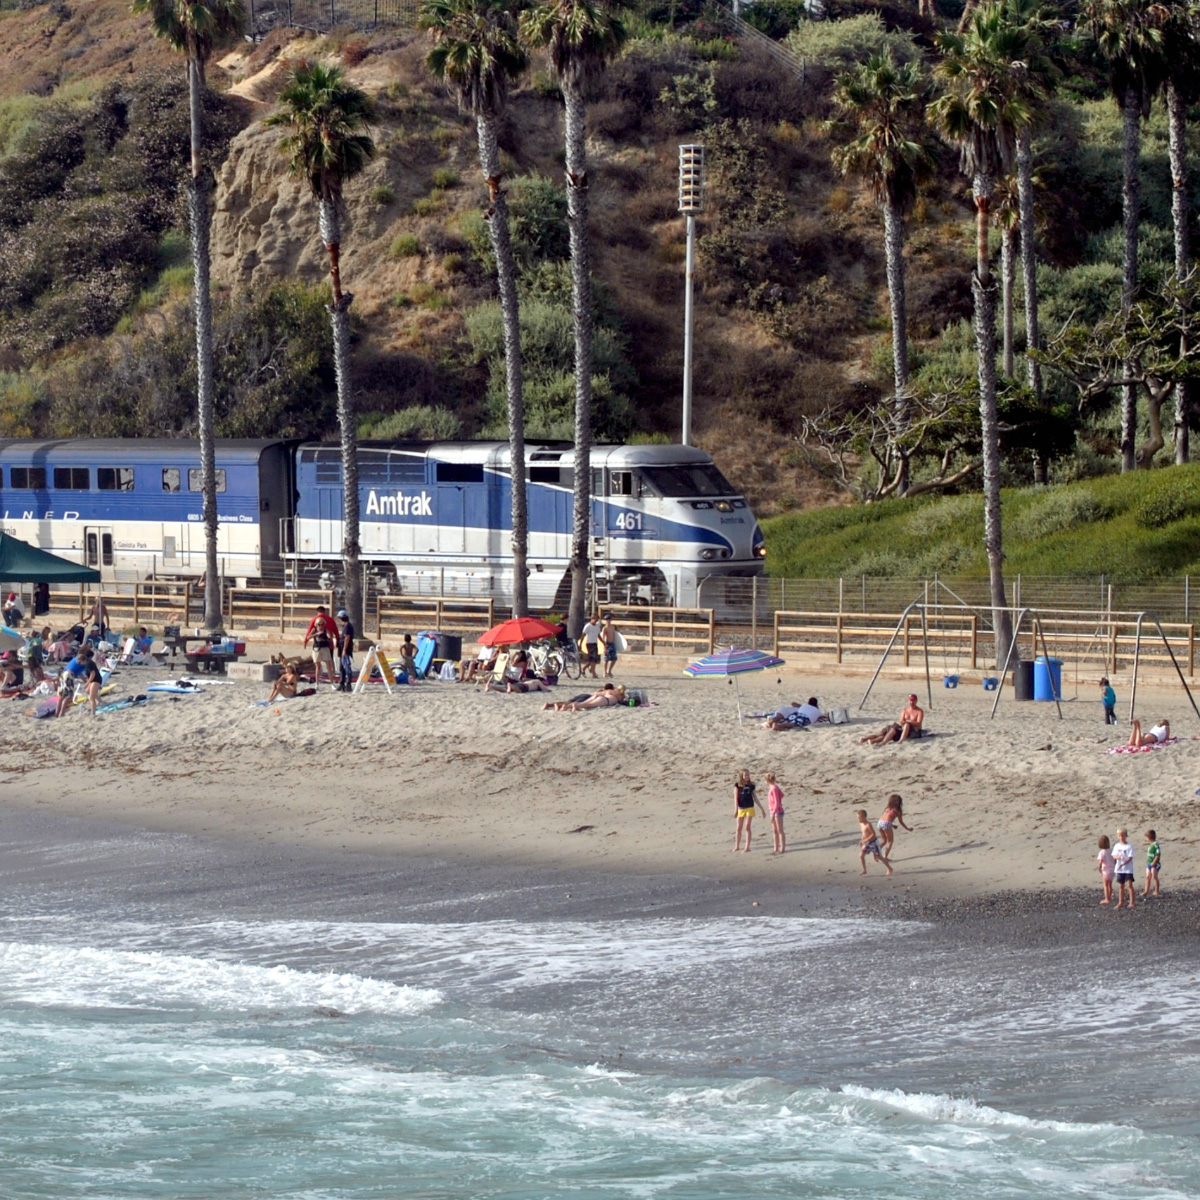 A train streaming along the California coast, threatened by sea level rise